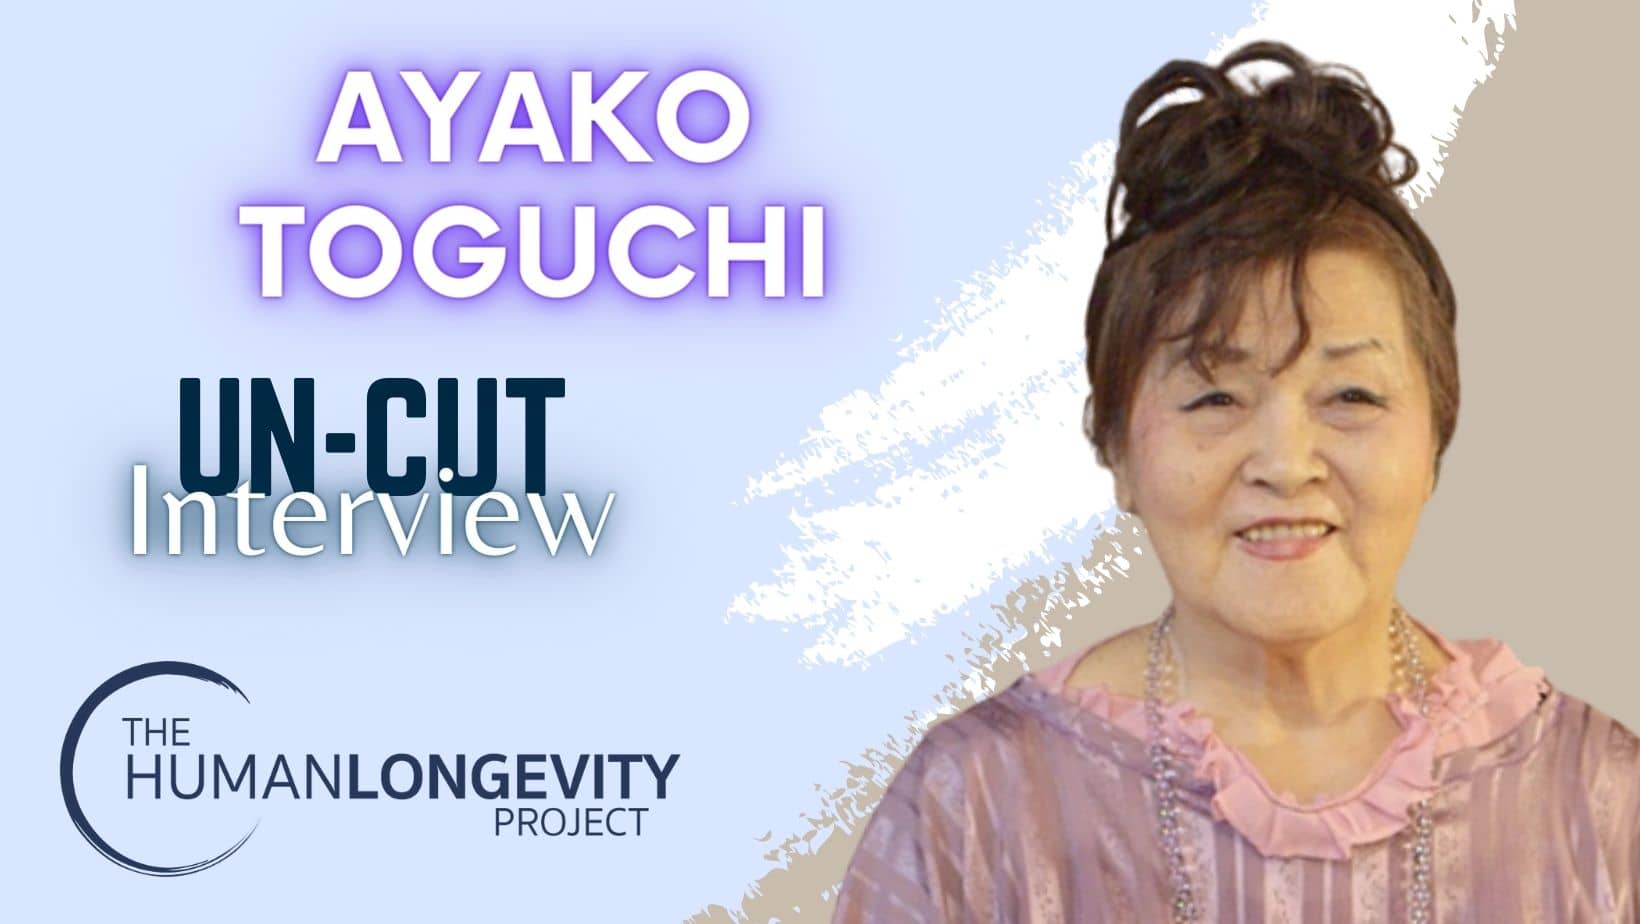 Human Longevity Project Uncut Interview With Ayako Toguchi